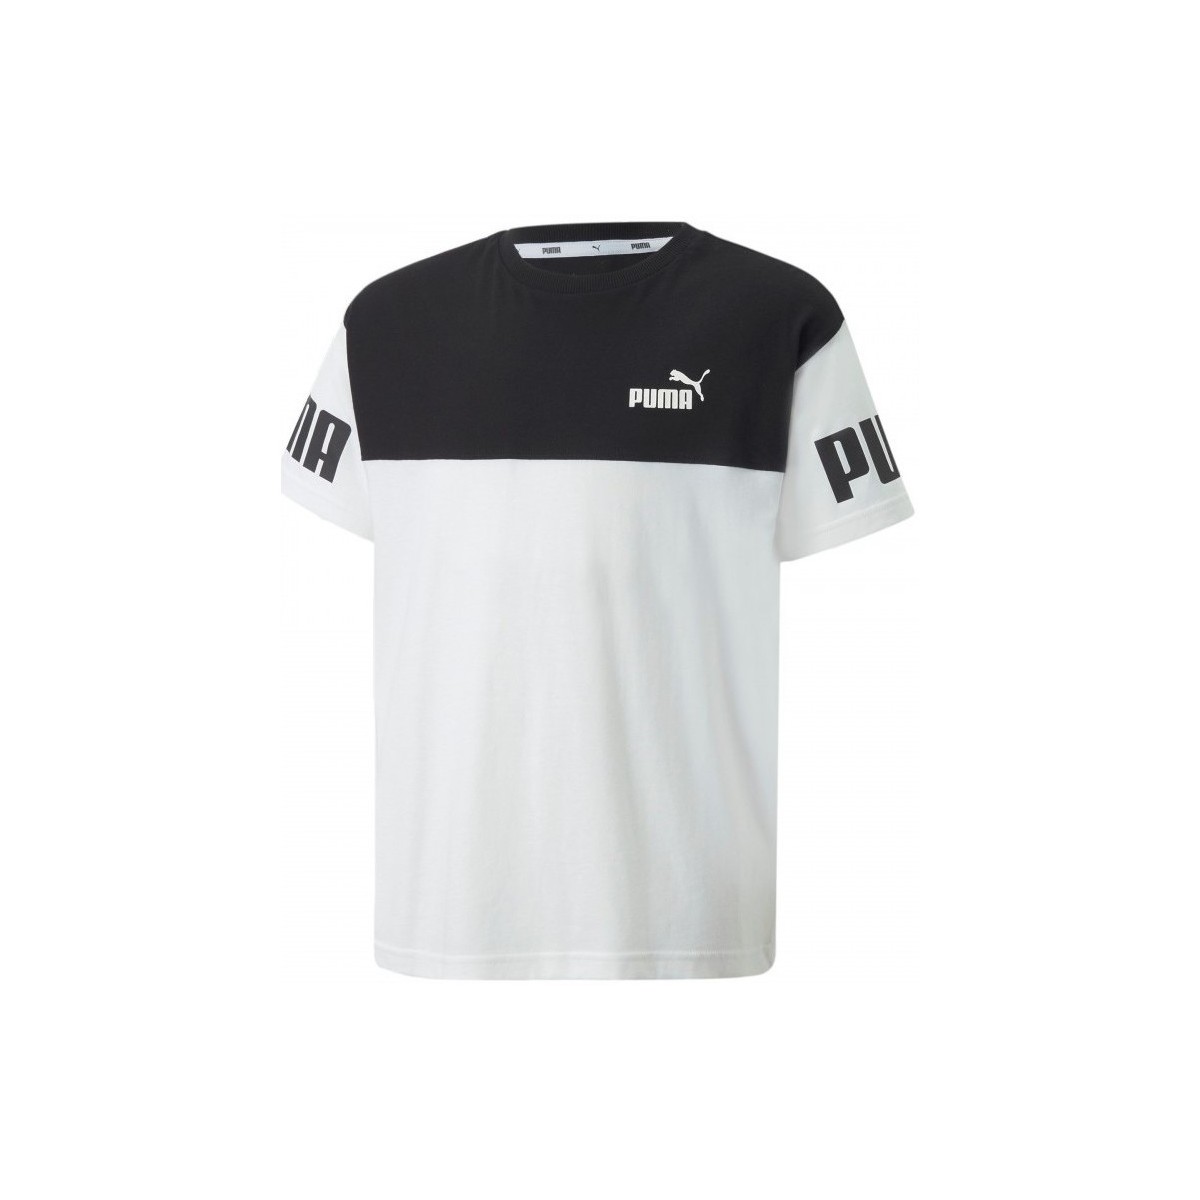 Vêtements Garçon T-shirts manches courtes Puma TEE SHIRT JR P PWR CLB -  WHITE - 140 Multicolore